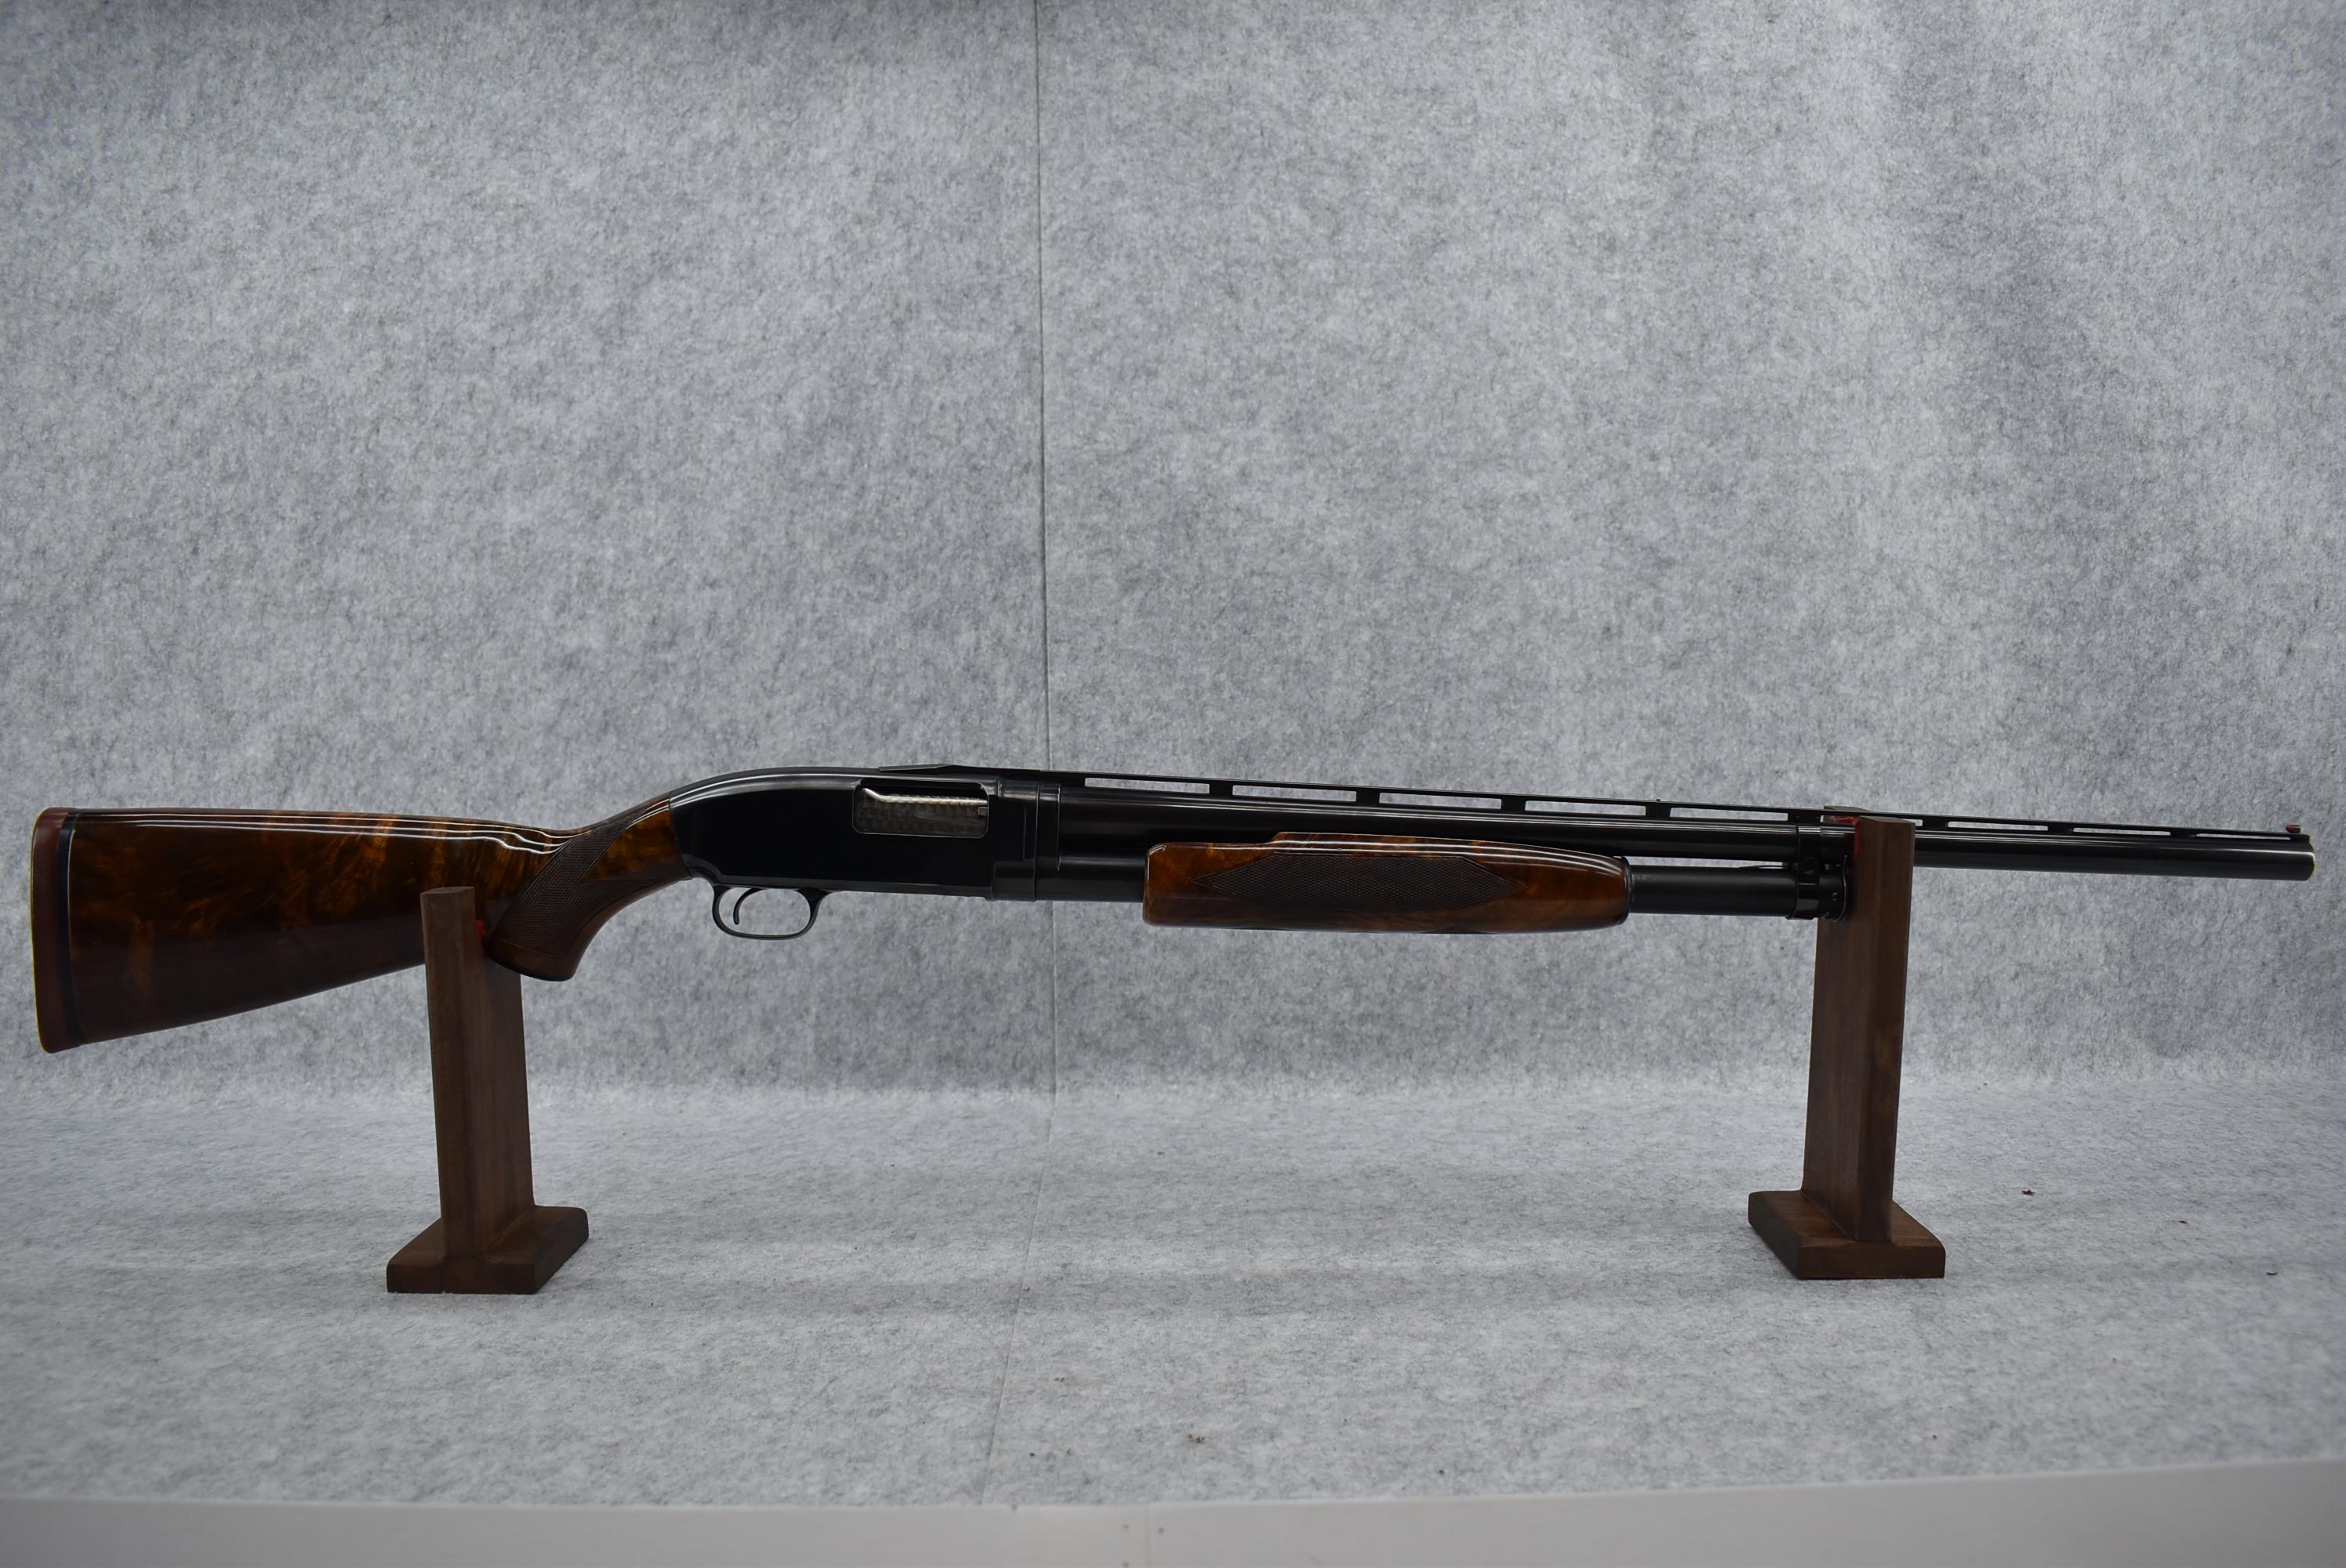 Winchester – Mod. 12 Skeet – 12ga. 2 ¾” Pump Action Shotgun